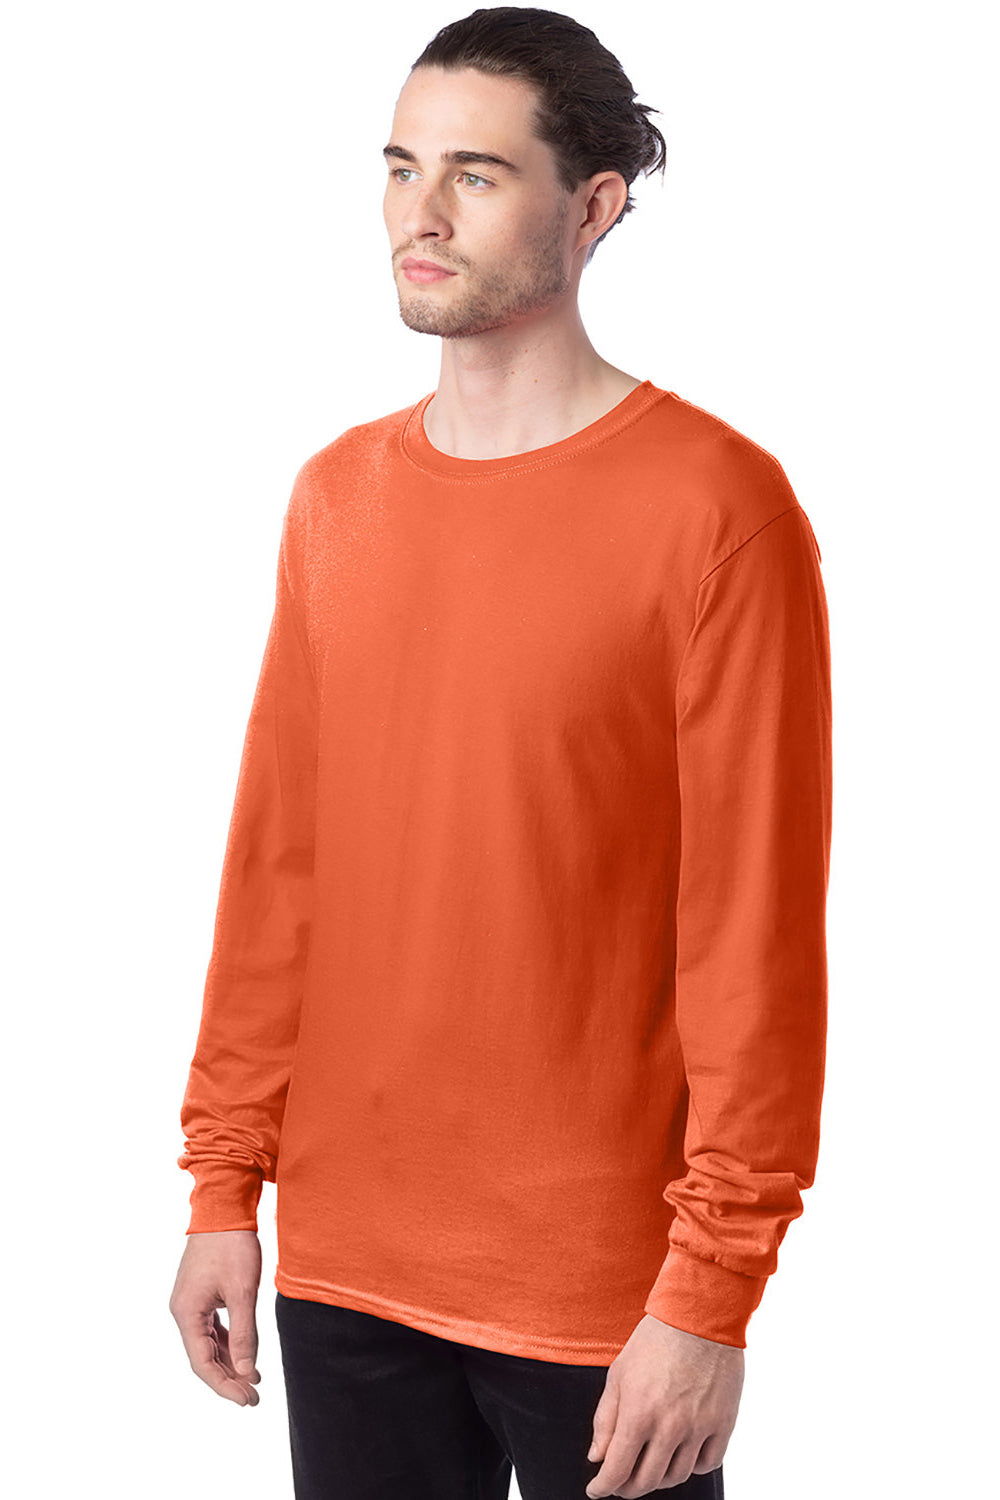 Hanes 5286 Mens ComfortSoft Long Sleeve Crewneck T-Shirt Texas Orange 3Q